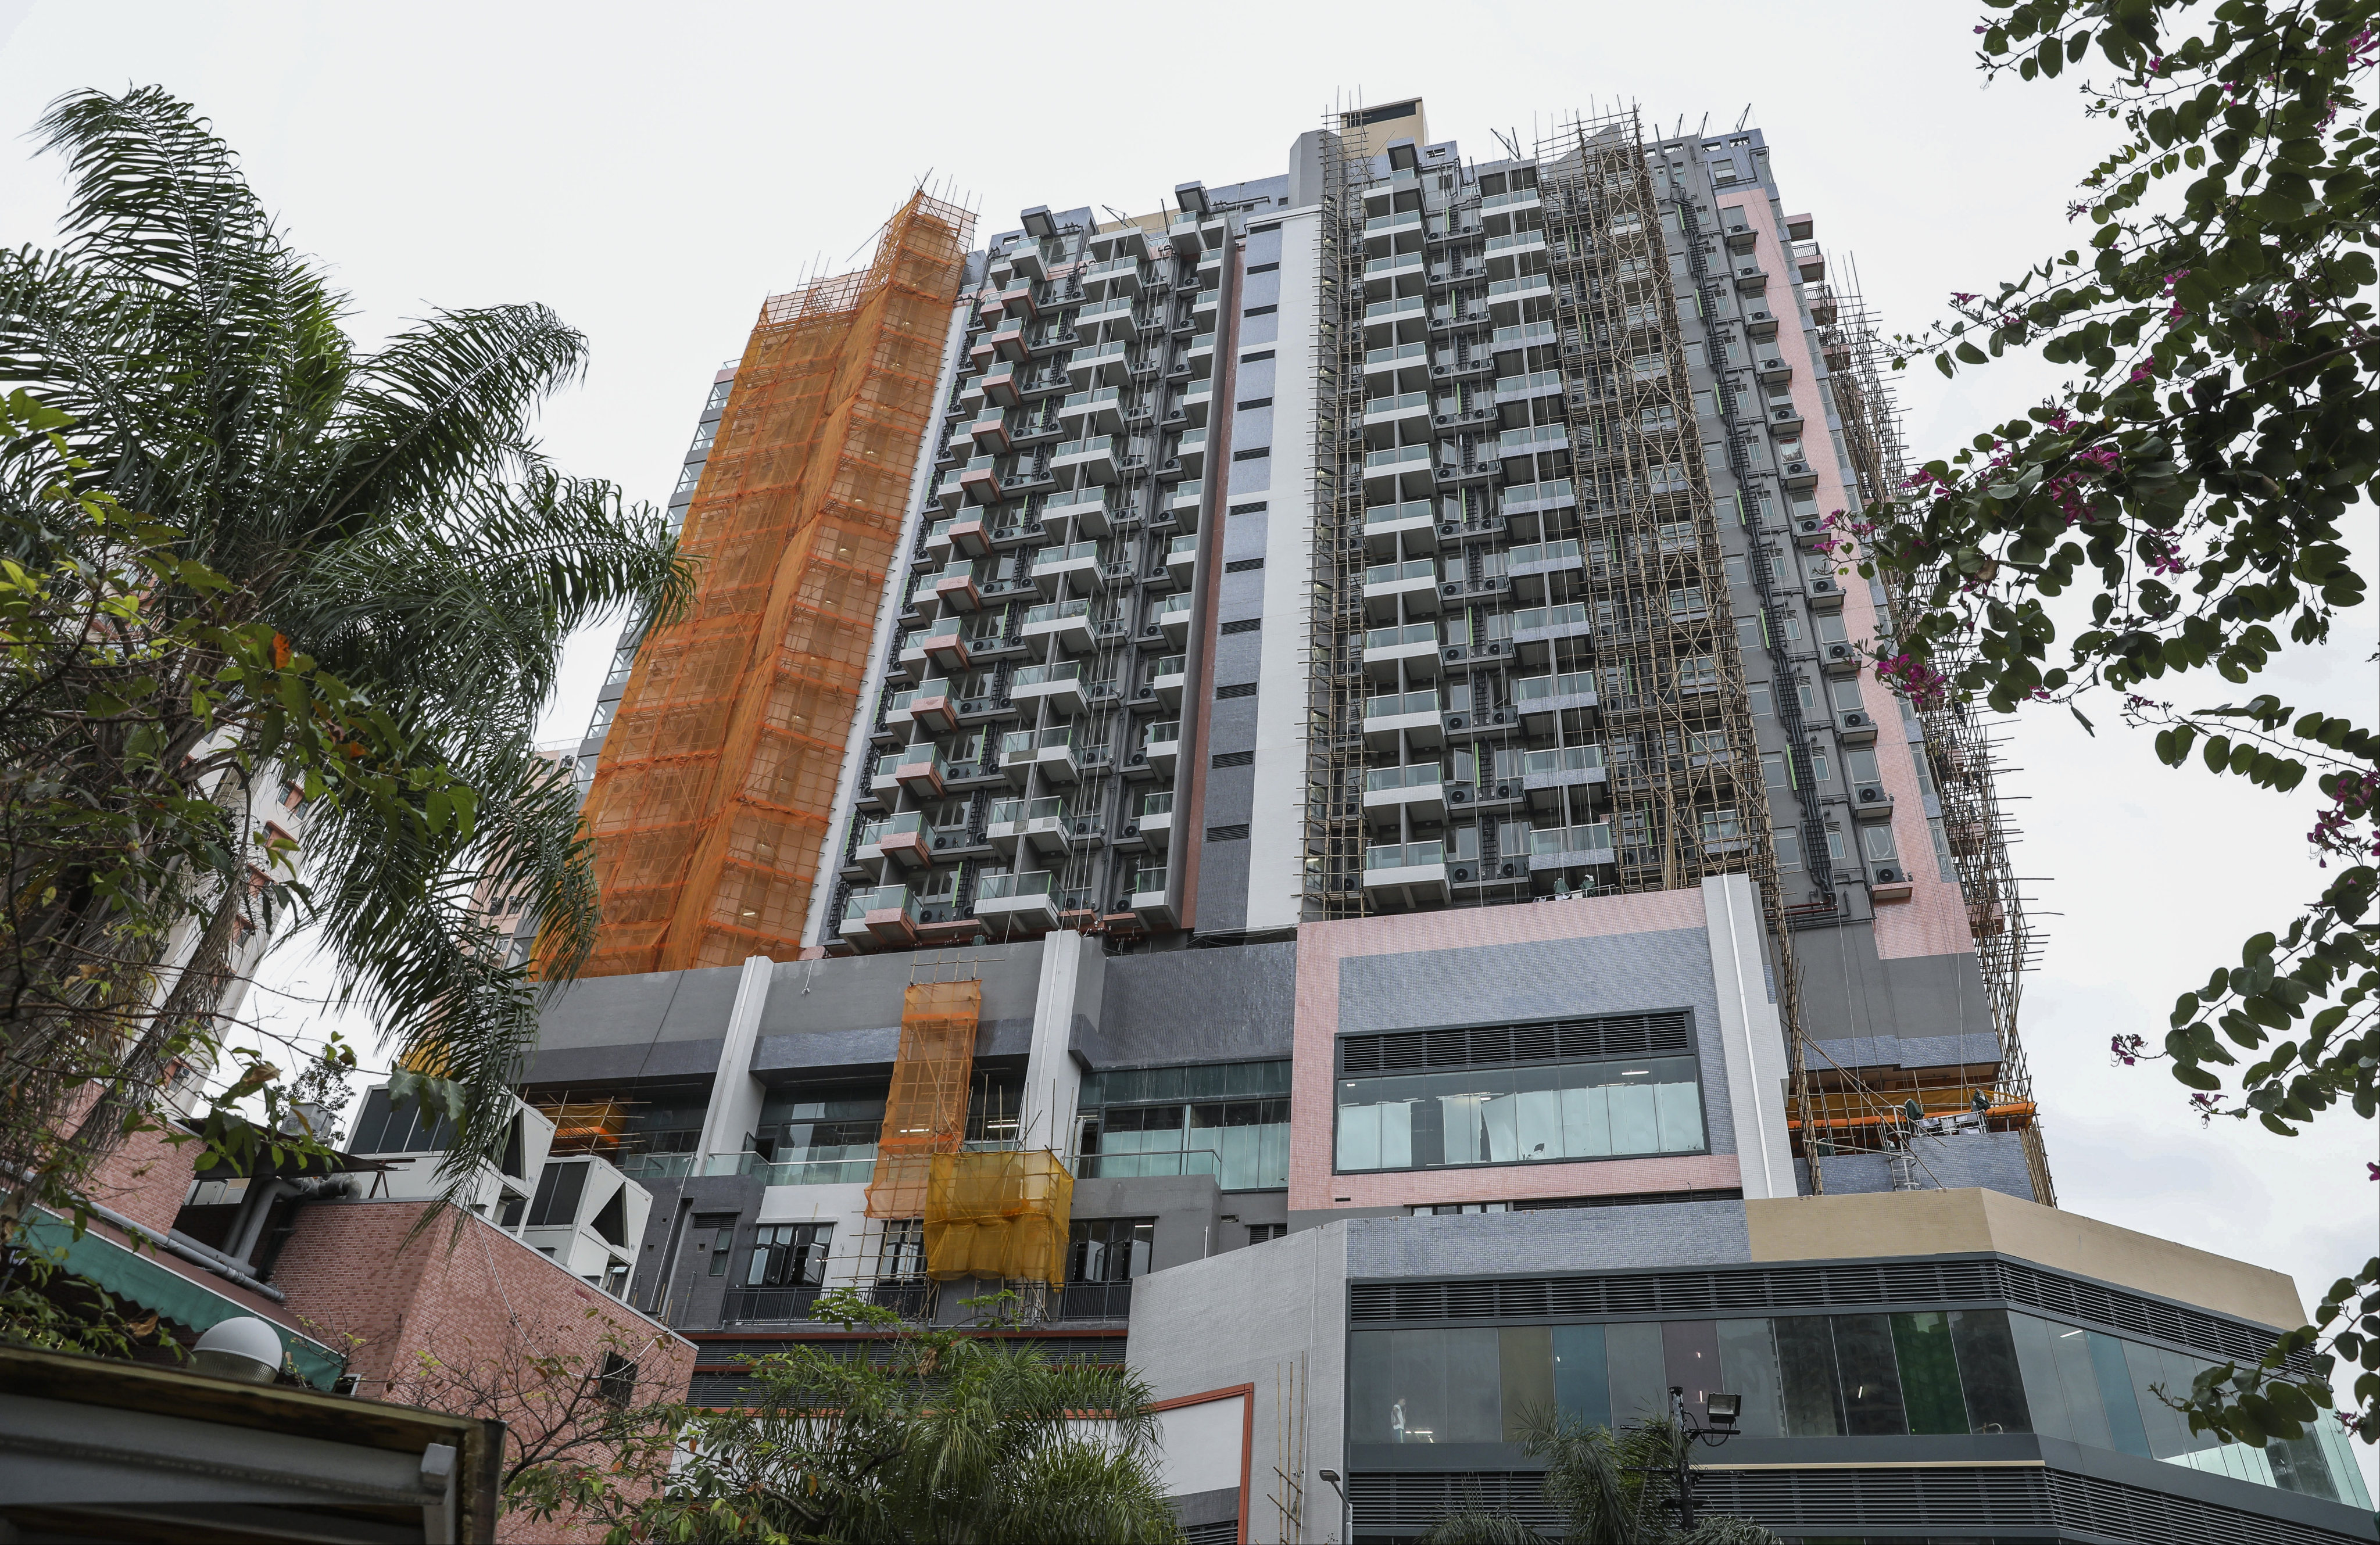 The T Plus residential development in Tuen Mun, pictured in November 2018. Photo: Nora Tam